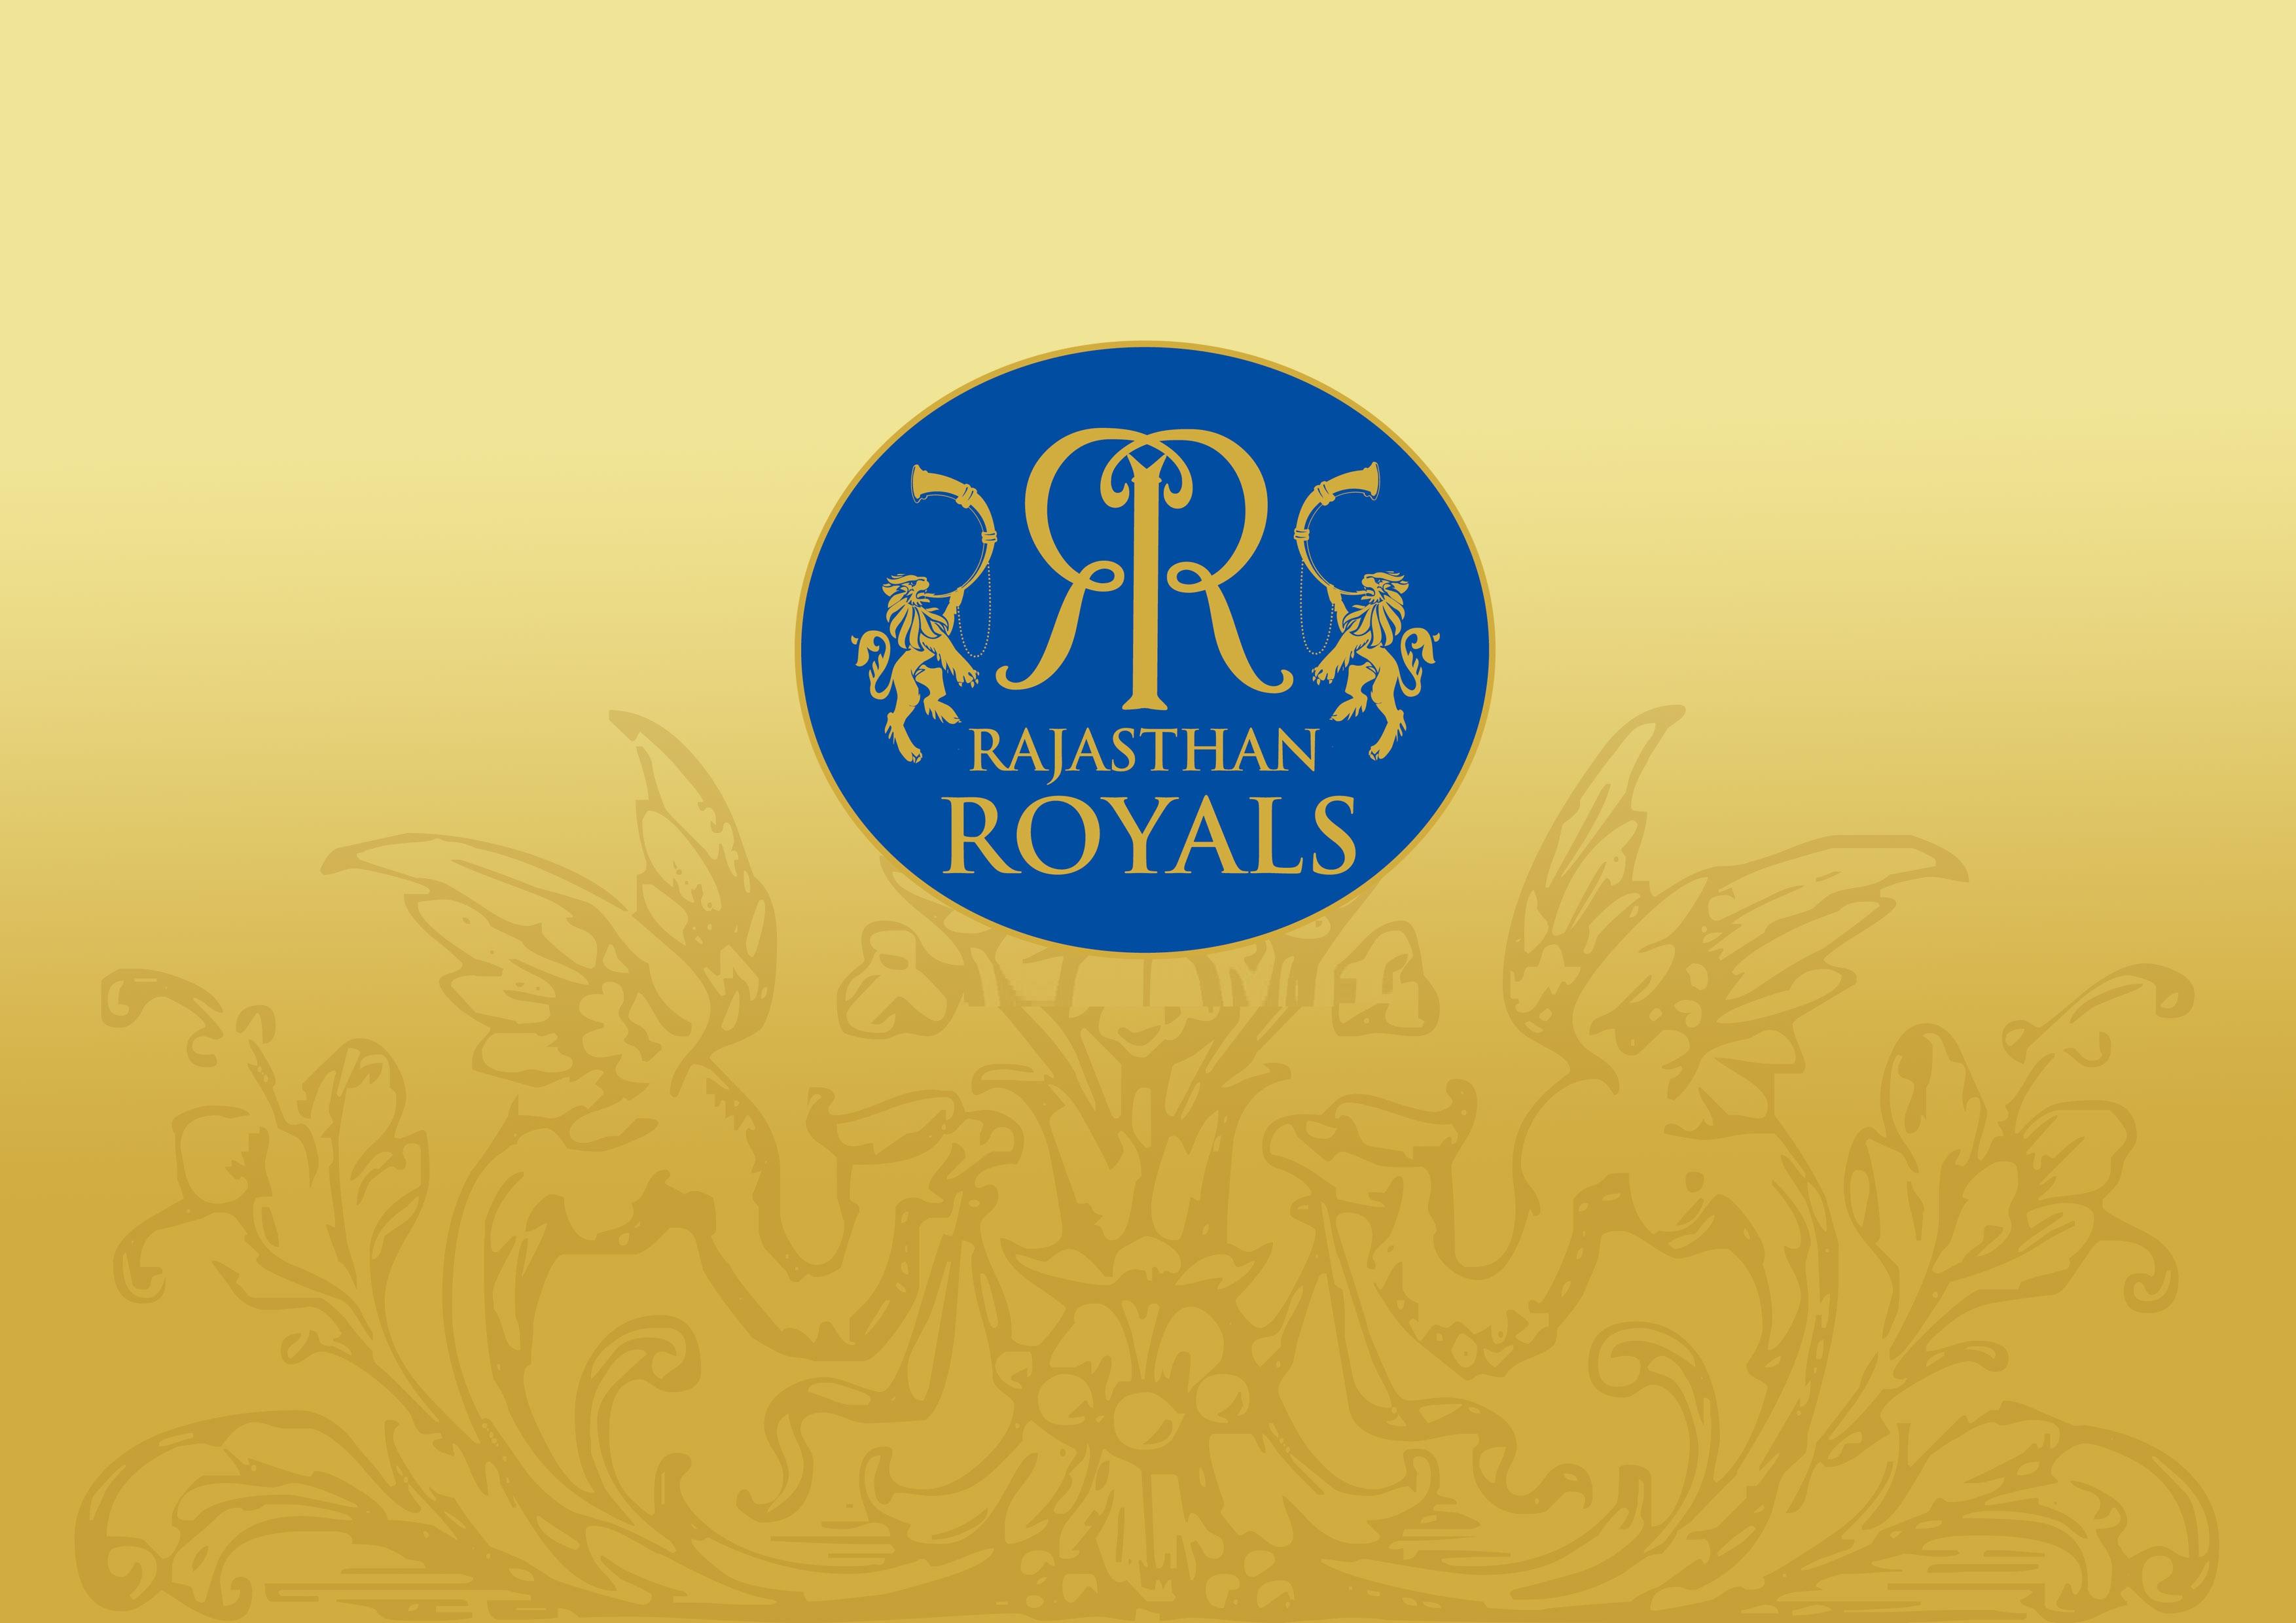 Rajasthan Royals logo wallpaper